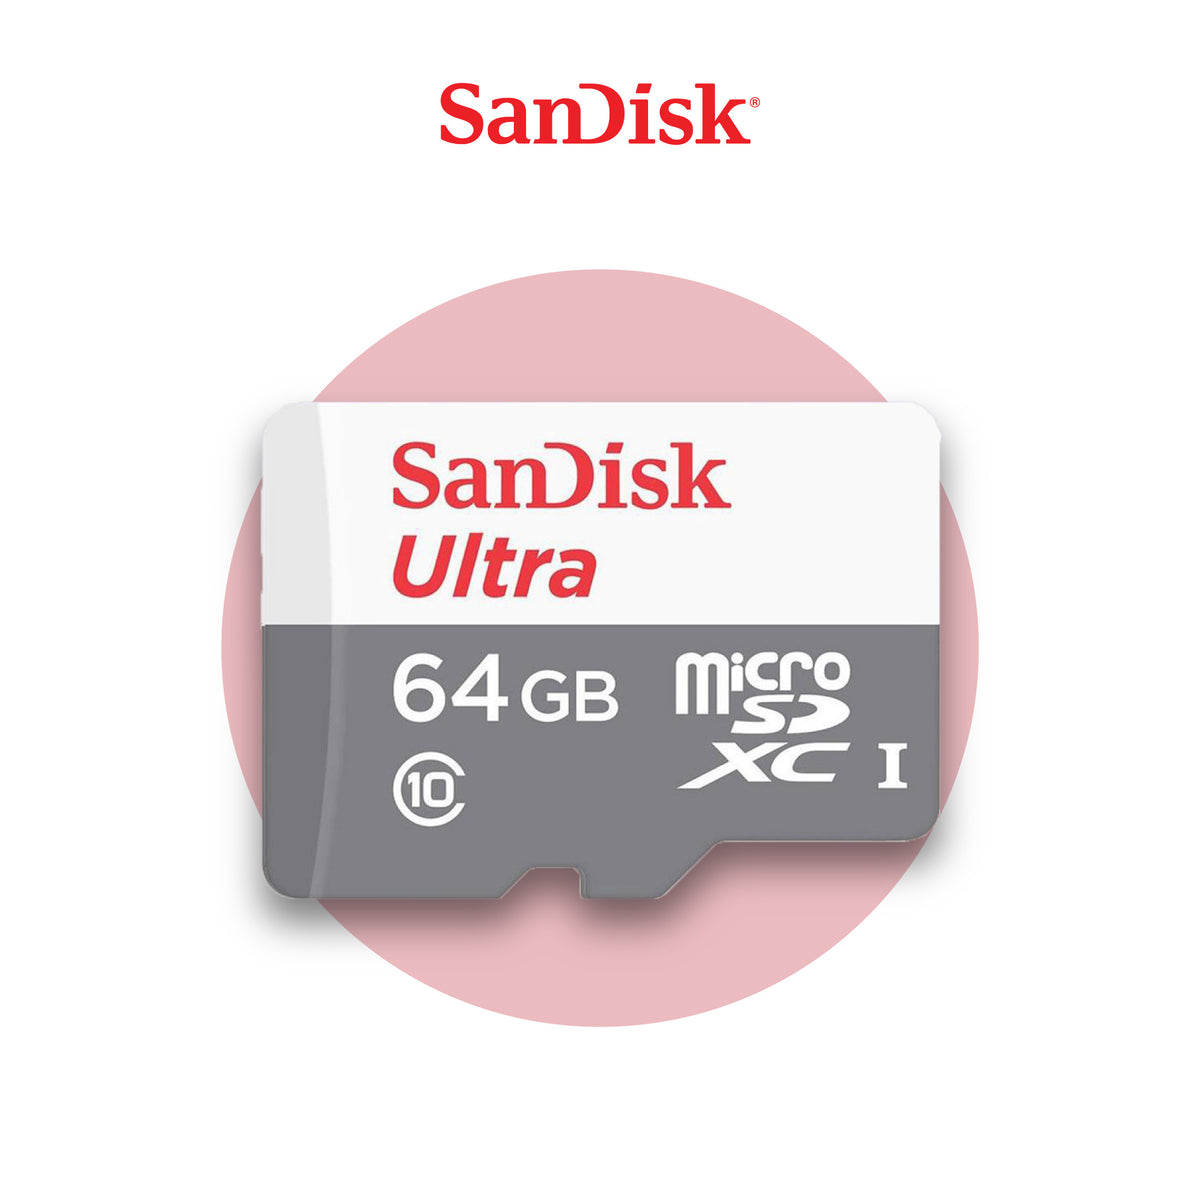 Sandisk Micro SD Ultra - 64GB